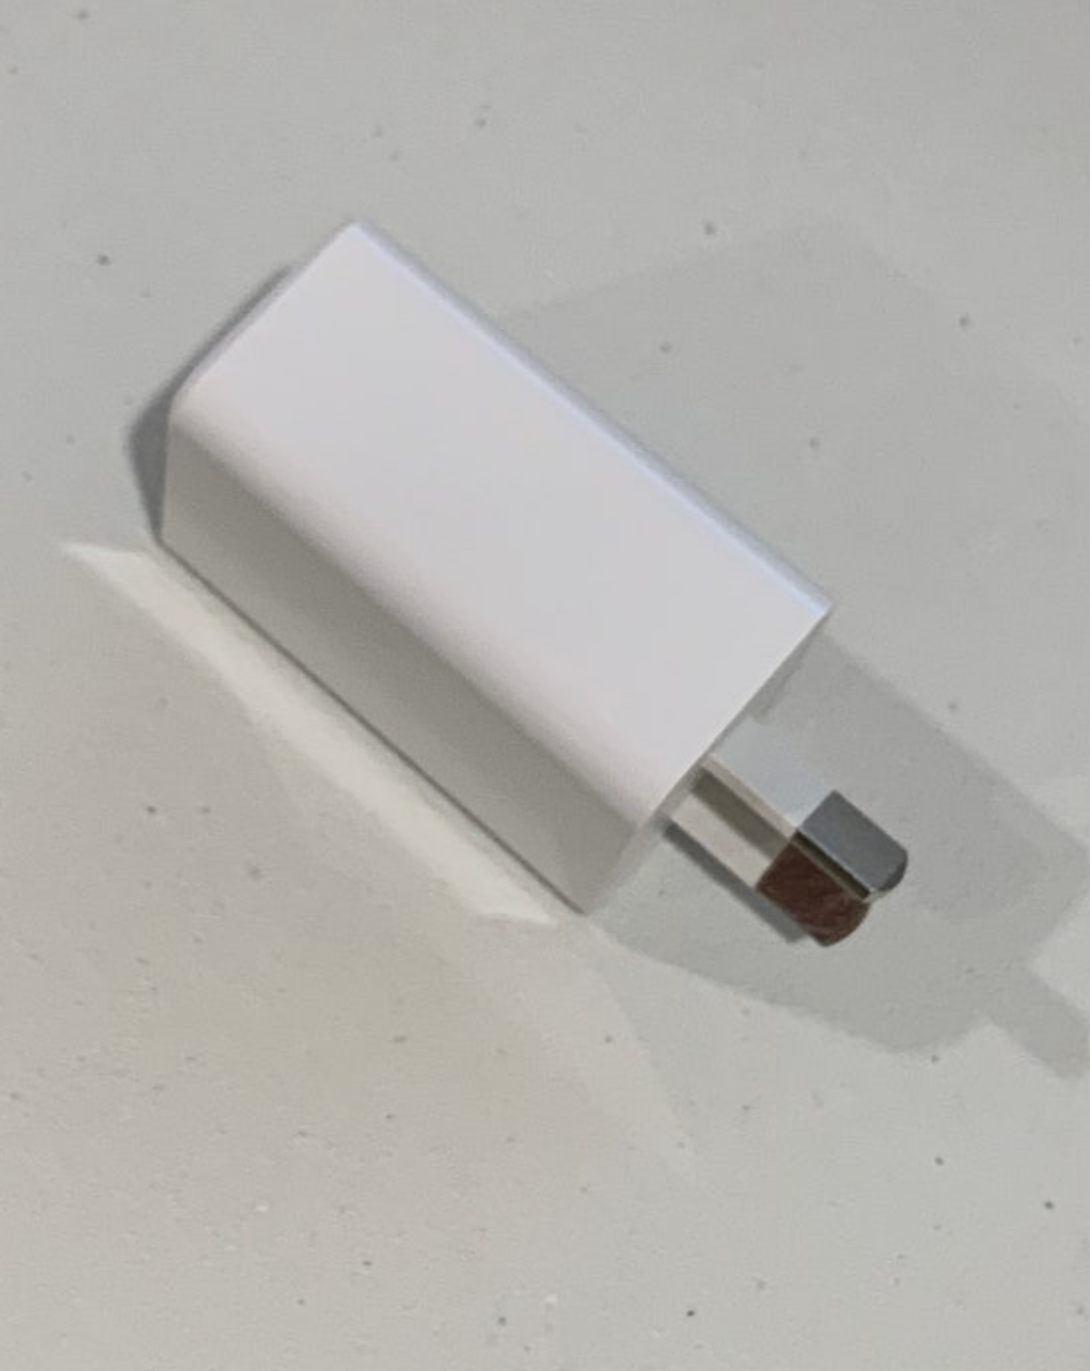 USB Power Adapter - Australian USB Adapter